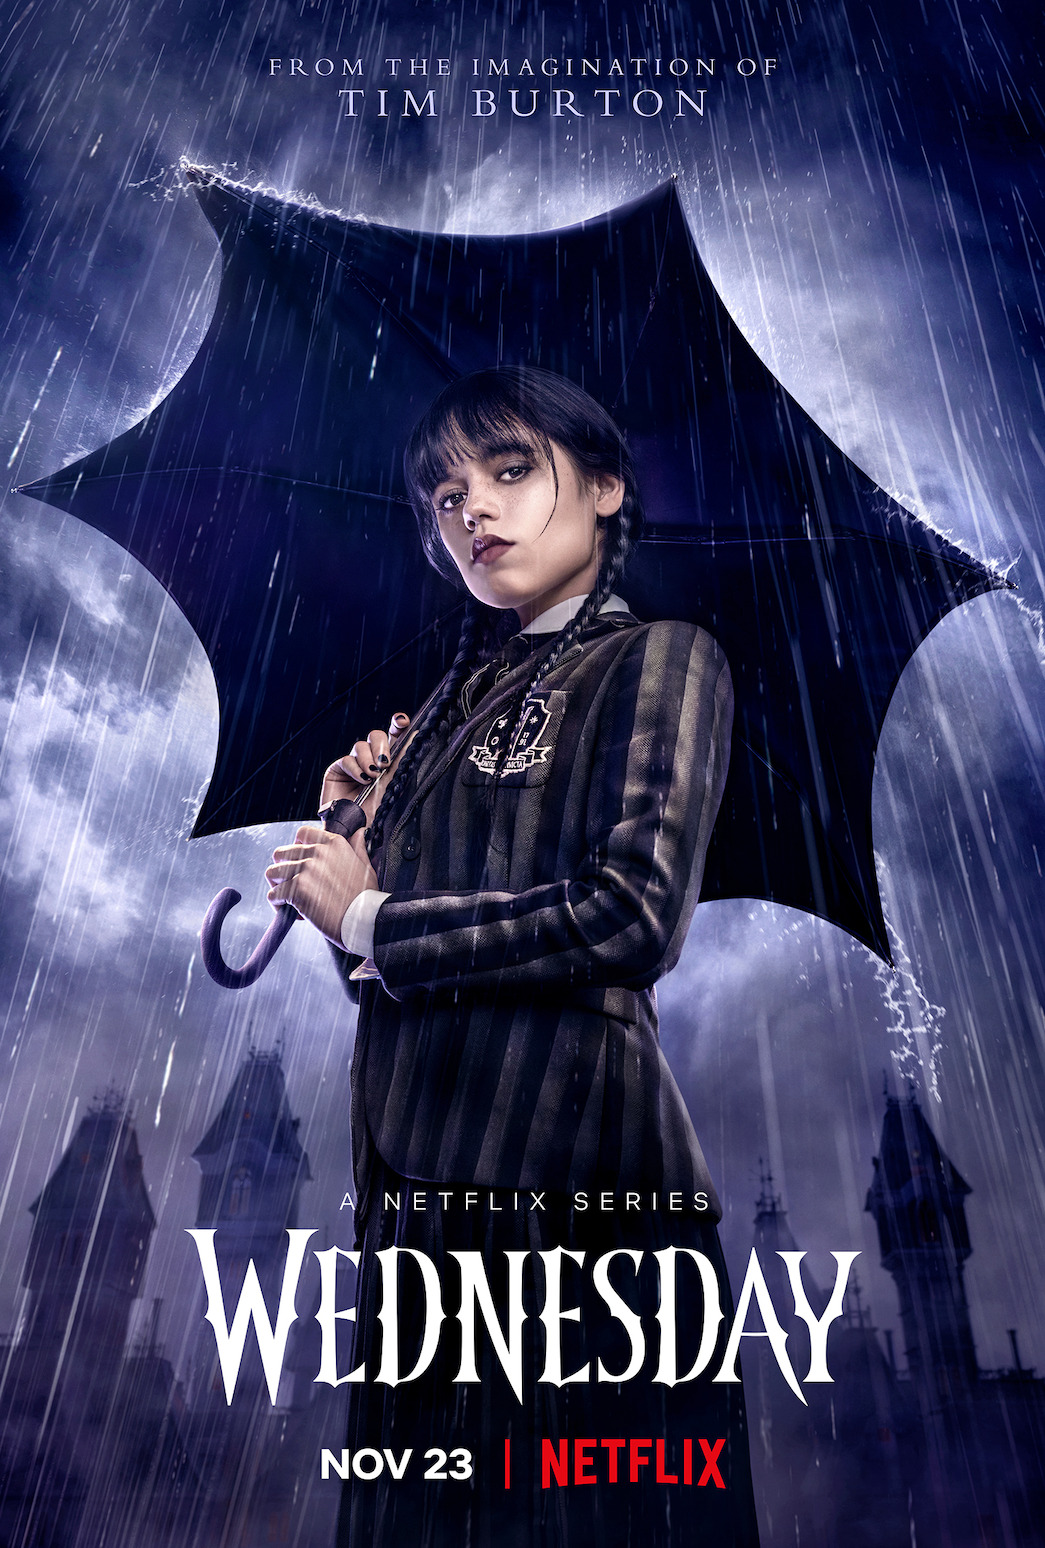 Movies Dark Wednesday Addams Wednesday TV Series Movie Poster Braids Jenna Ortega Rain Umbrella Scho 1045x1548